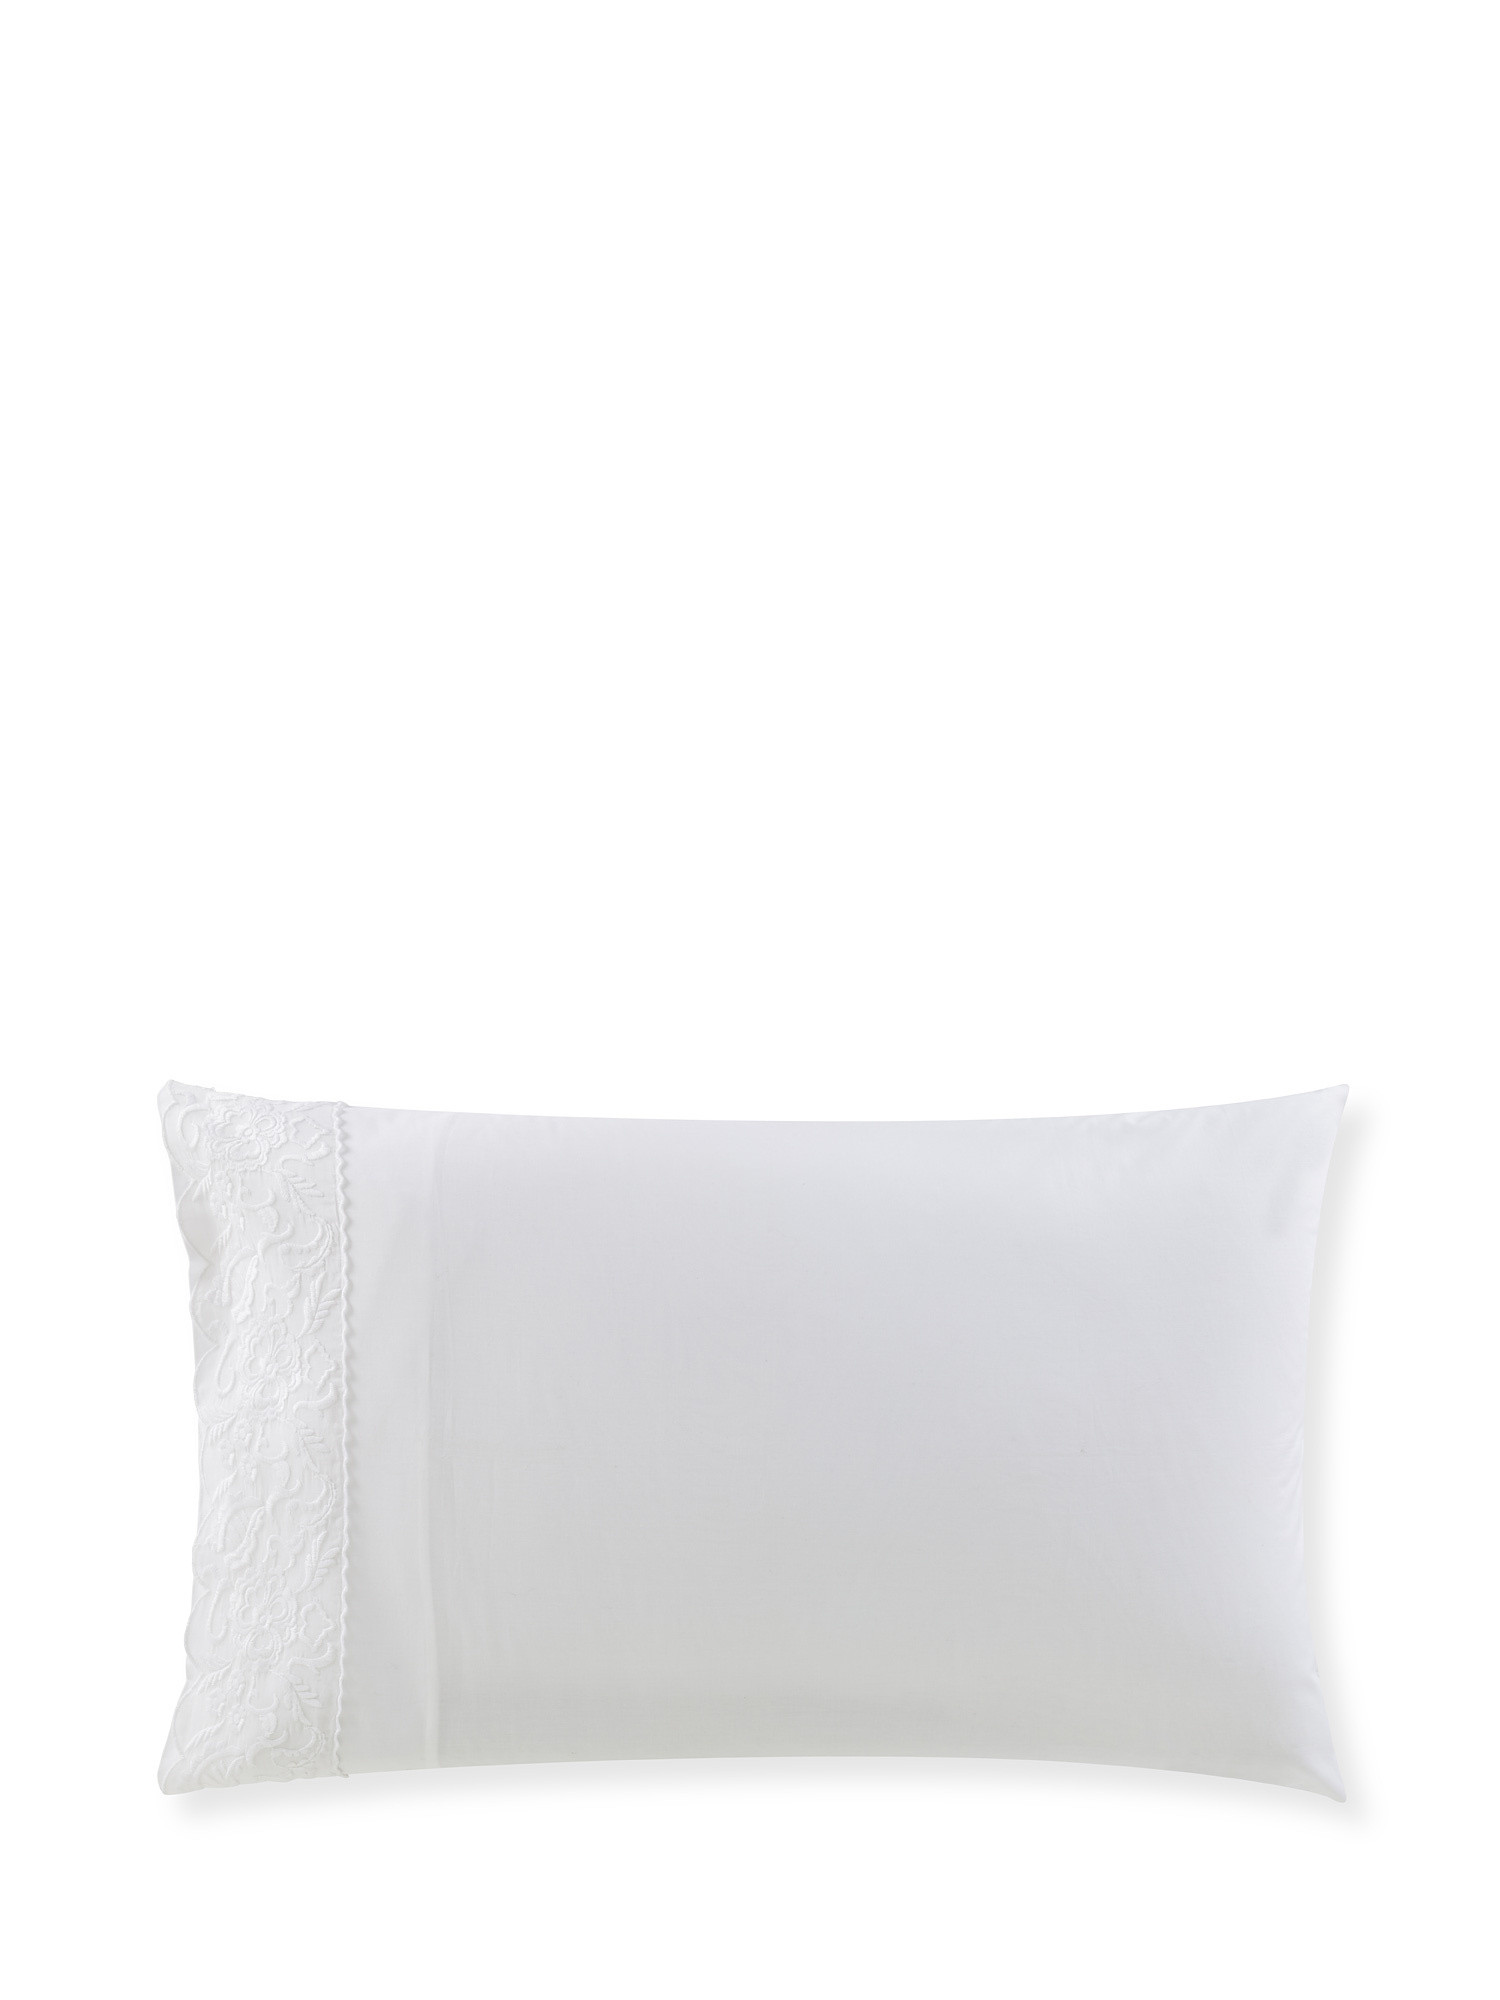 Portofino pillowcase in 100% cotton percale lace, White, large image number 0